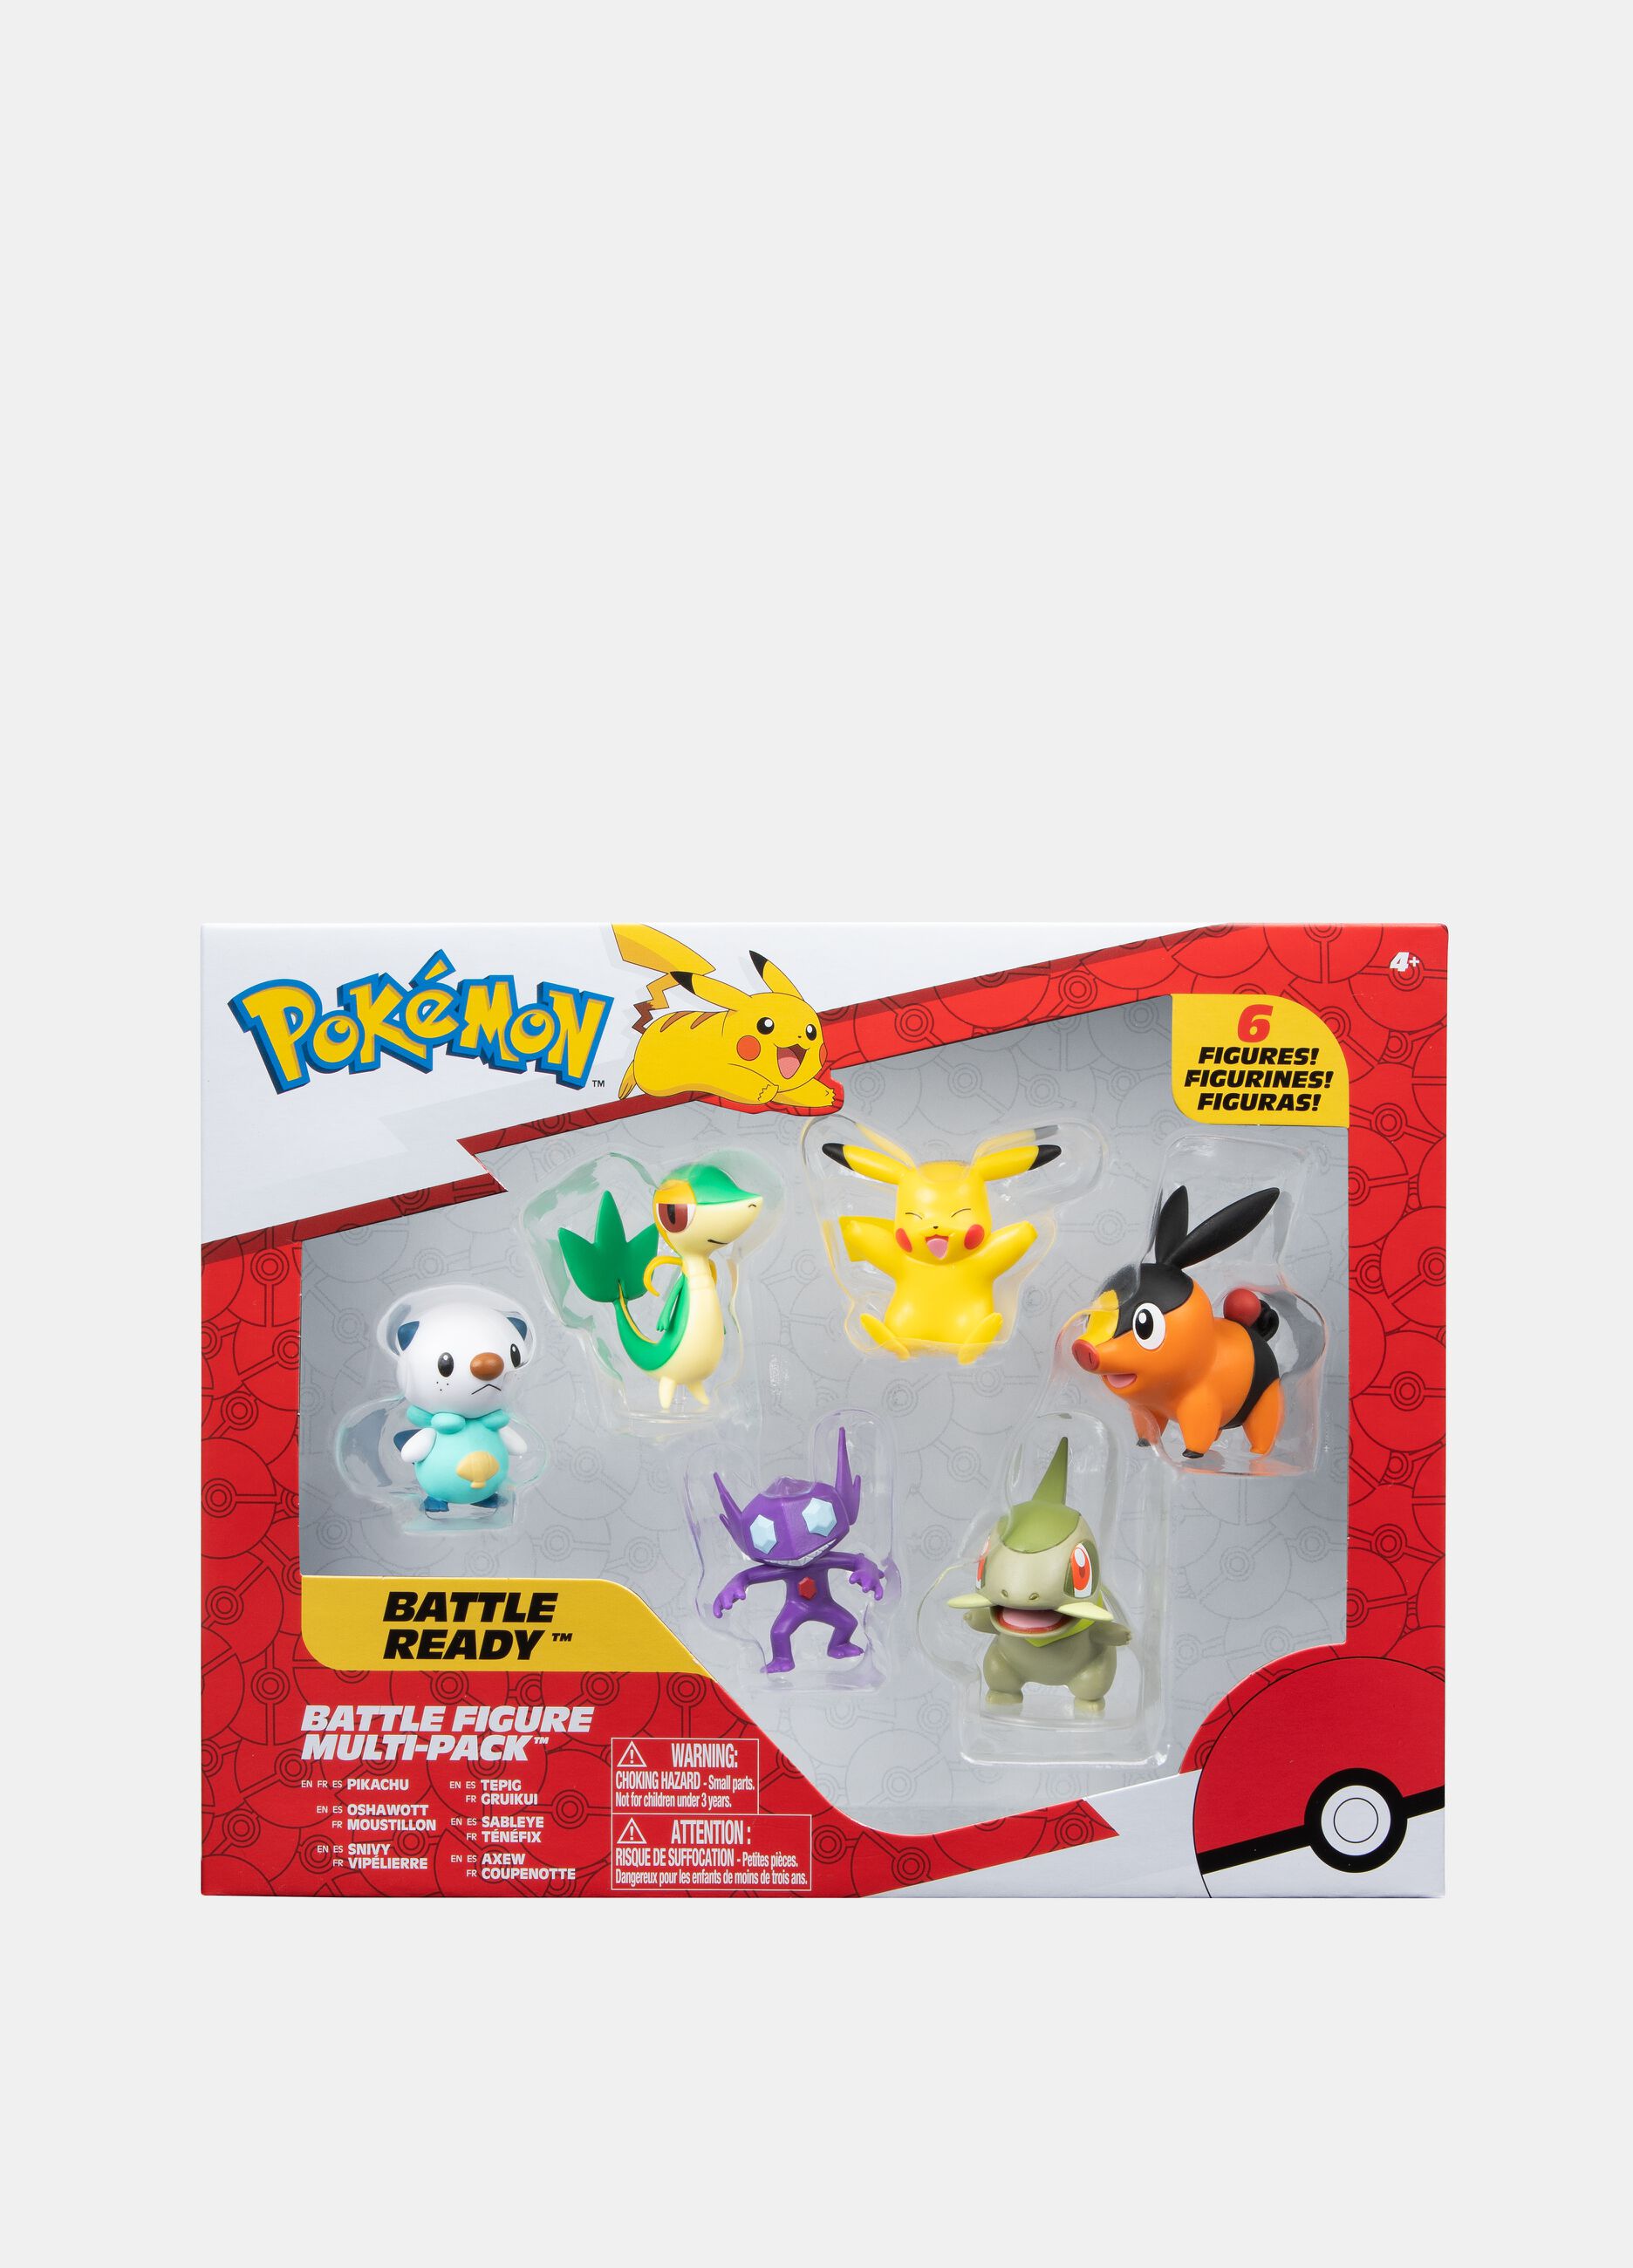 Set of 6 Pokémon figurines